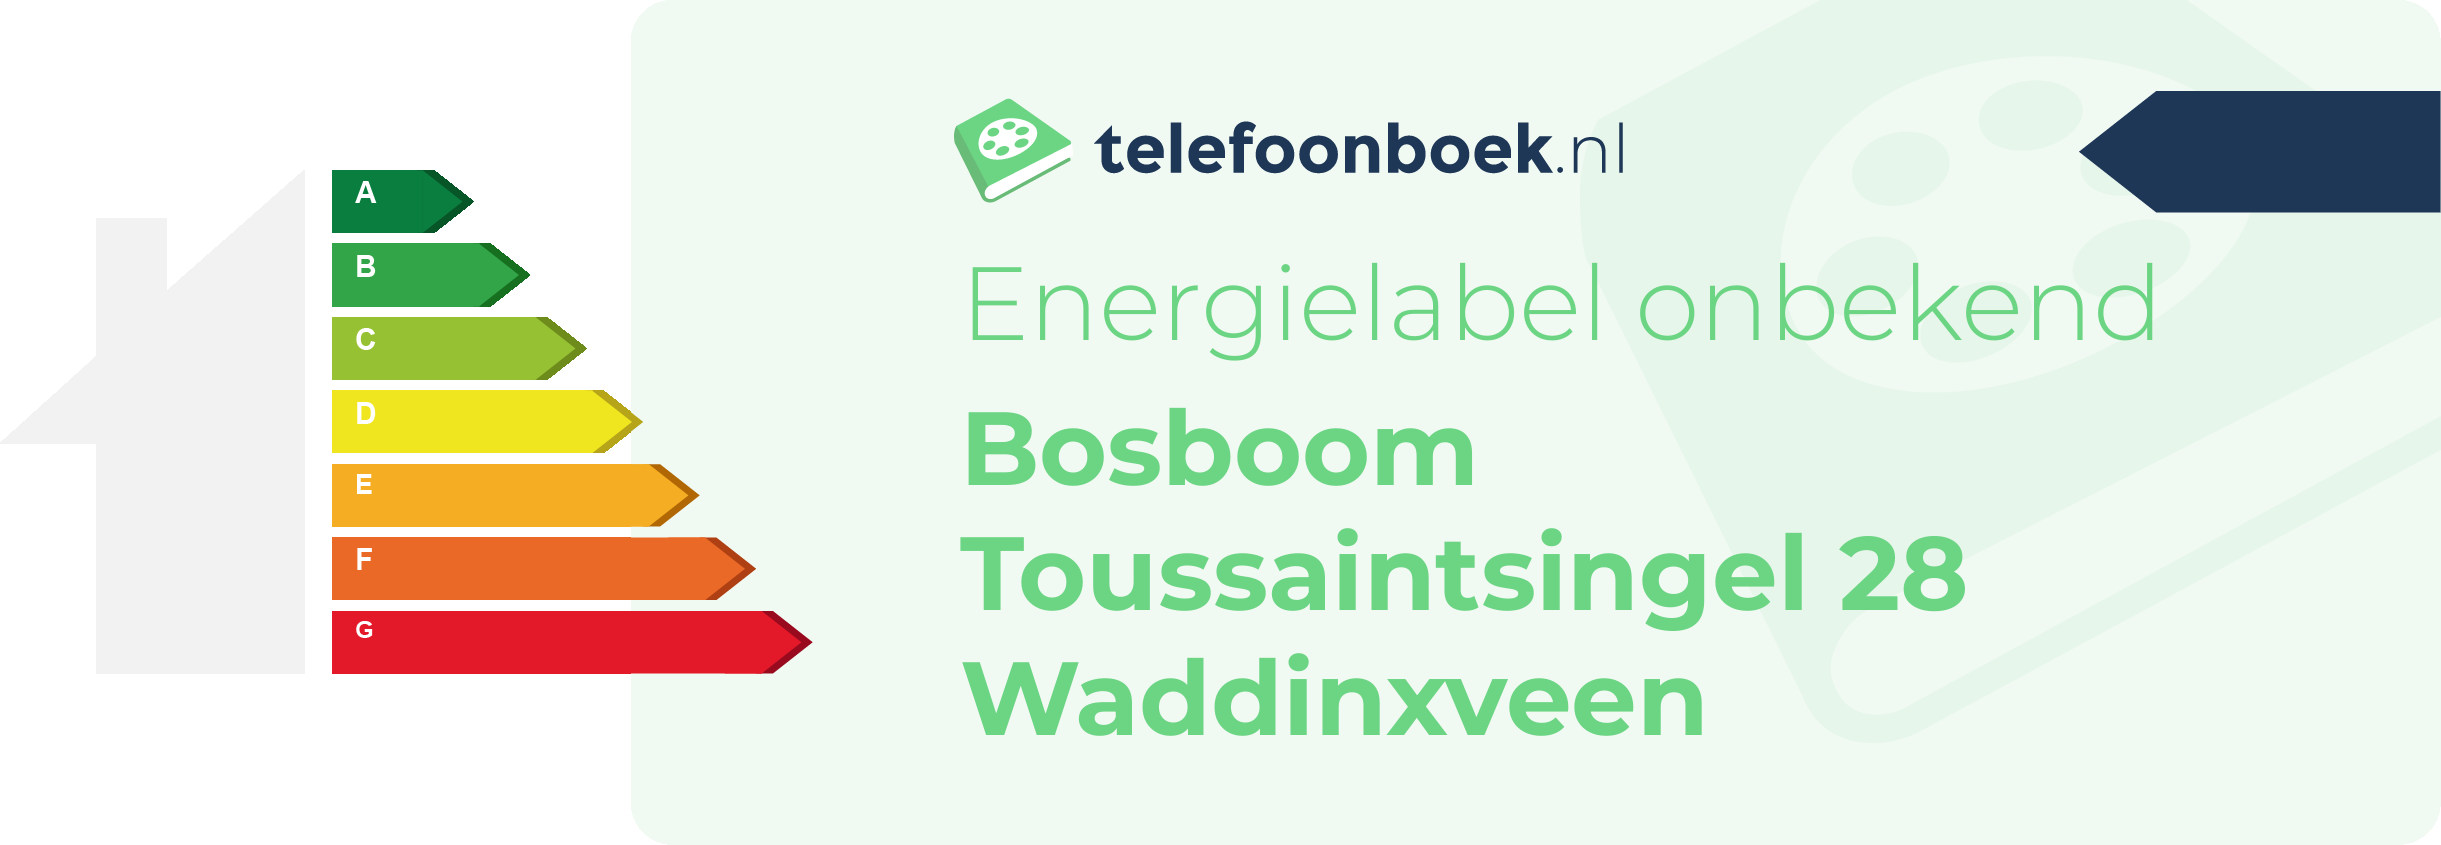 Energielabel Bosboom Toussaintsingel 28 Waddinxveen